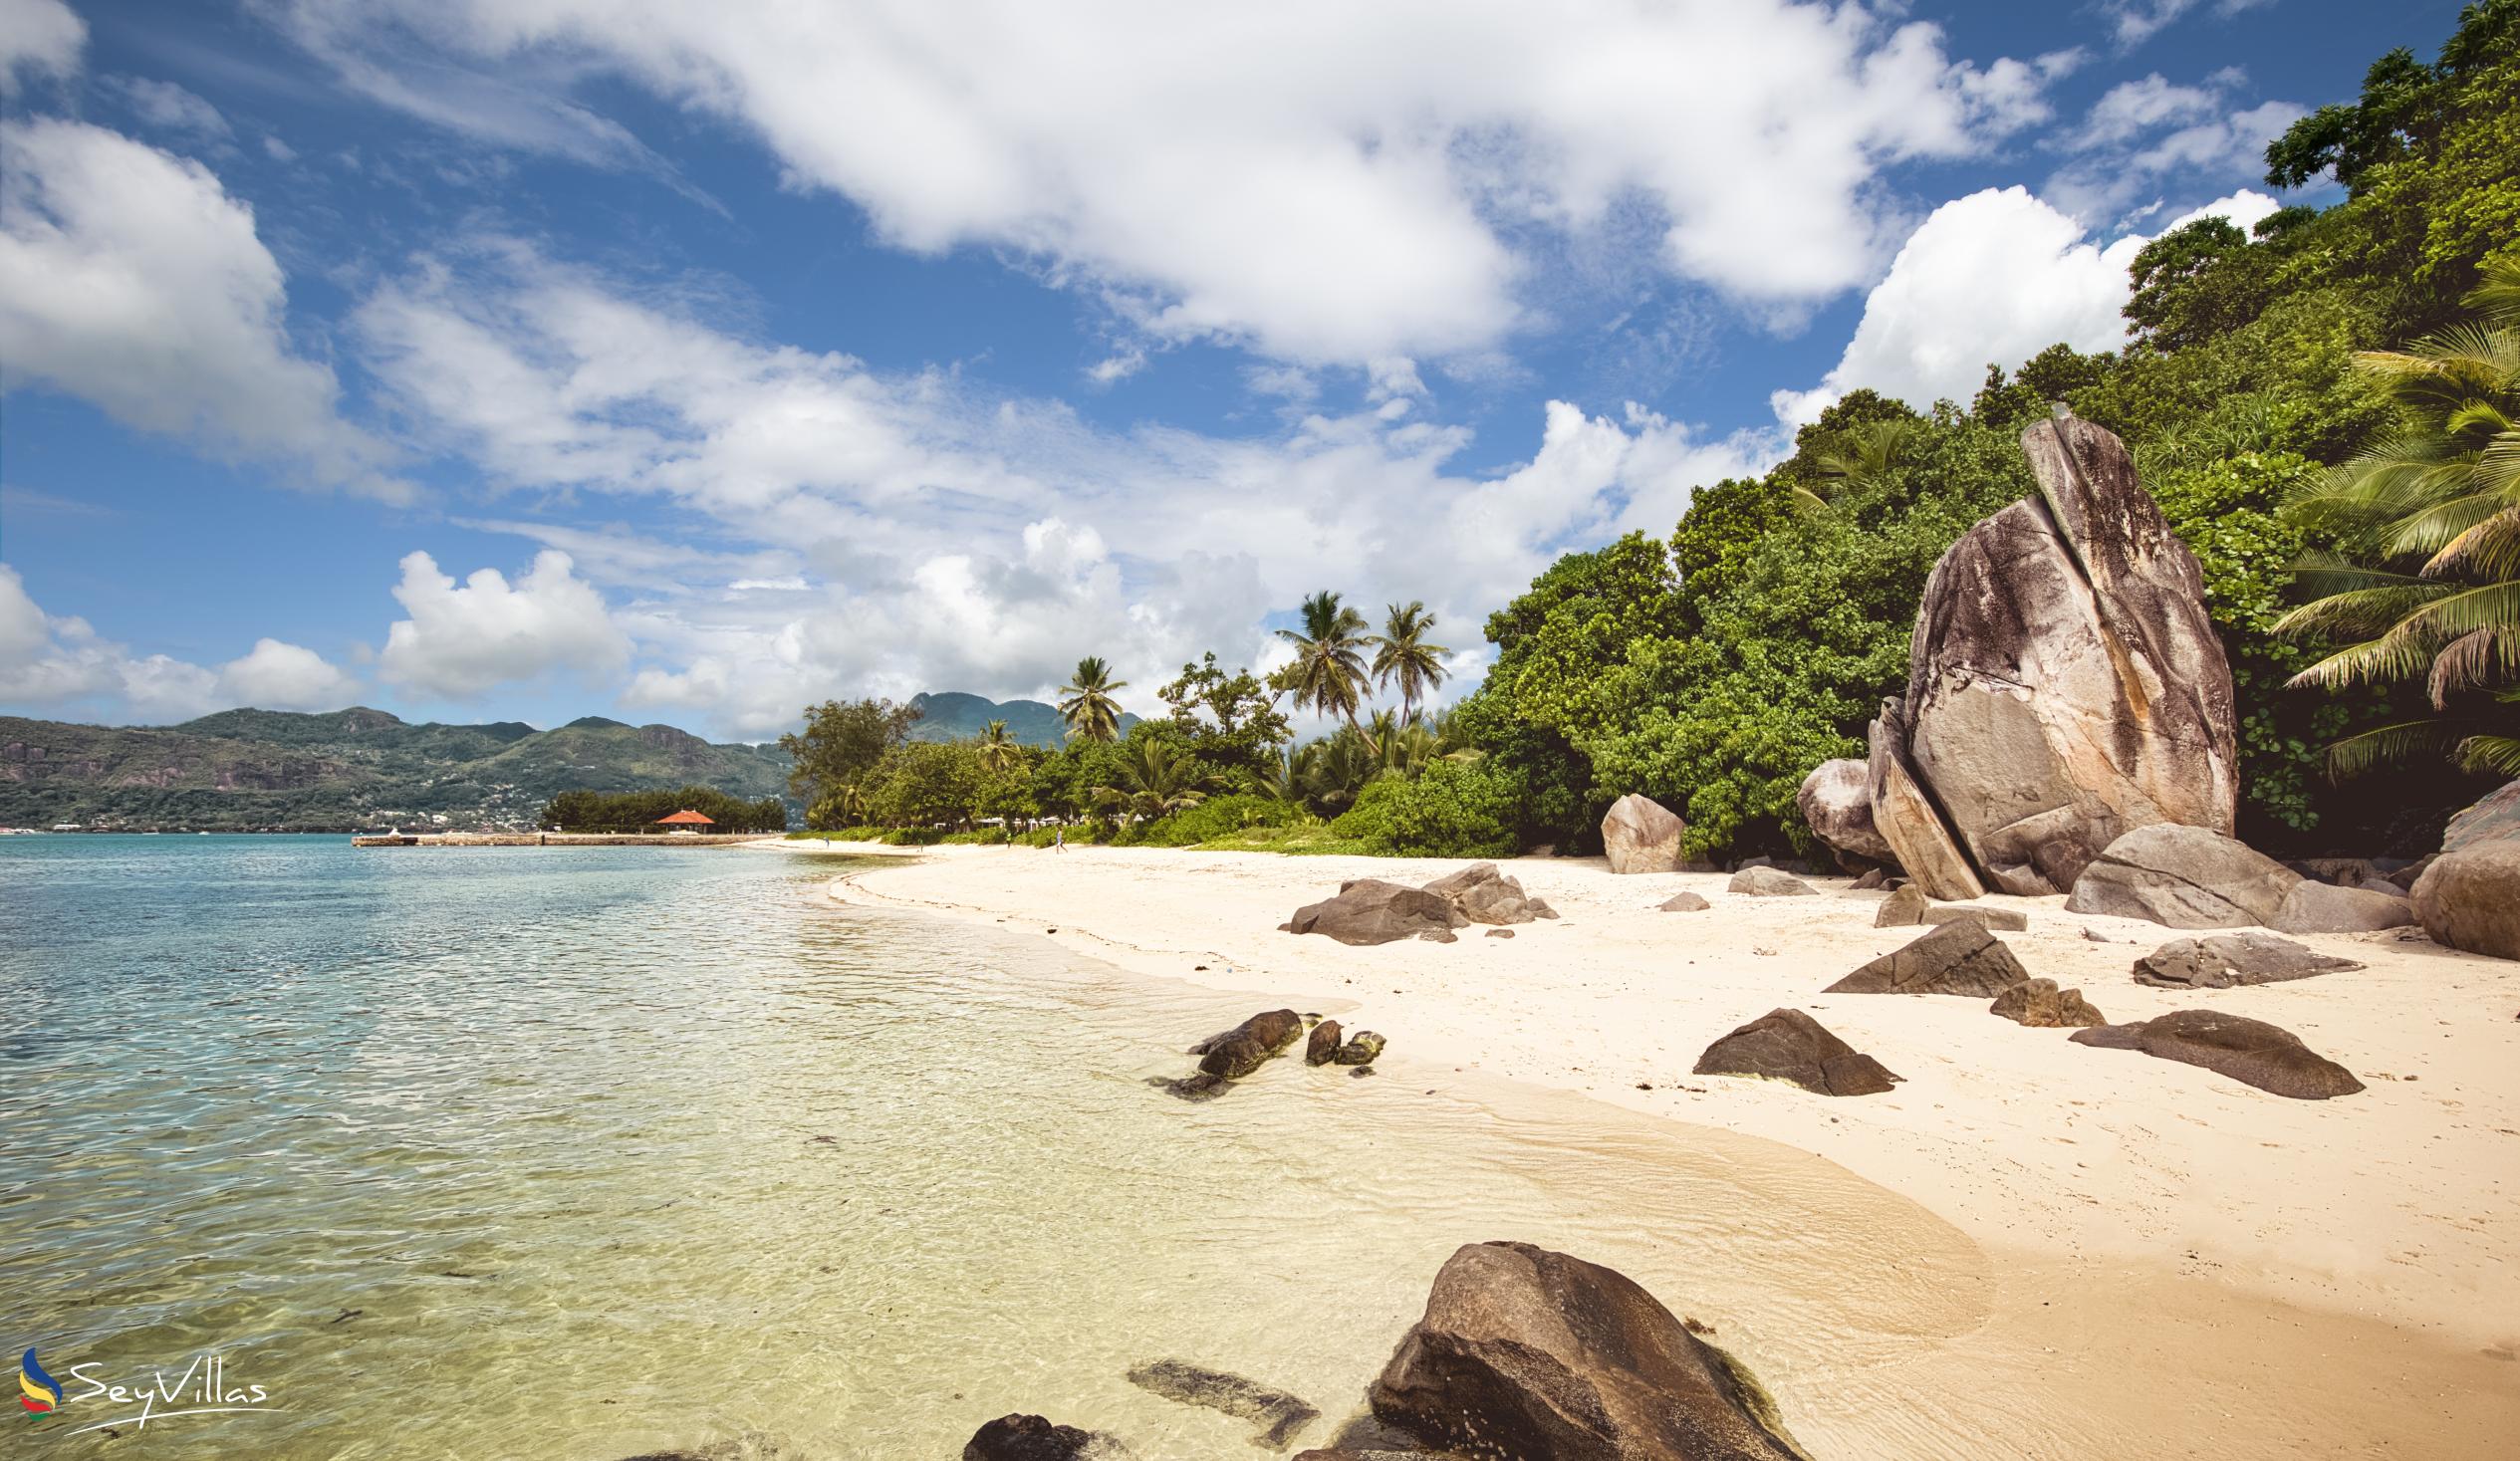 Photo 42: Club Med Seychelles - Location - Saint Anne (Seychelles)